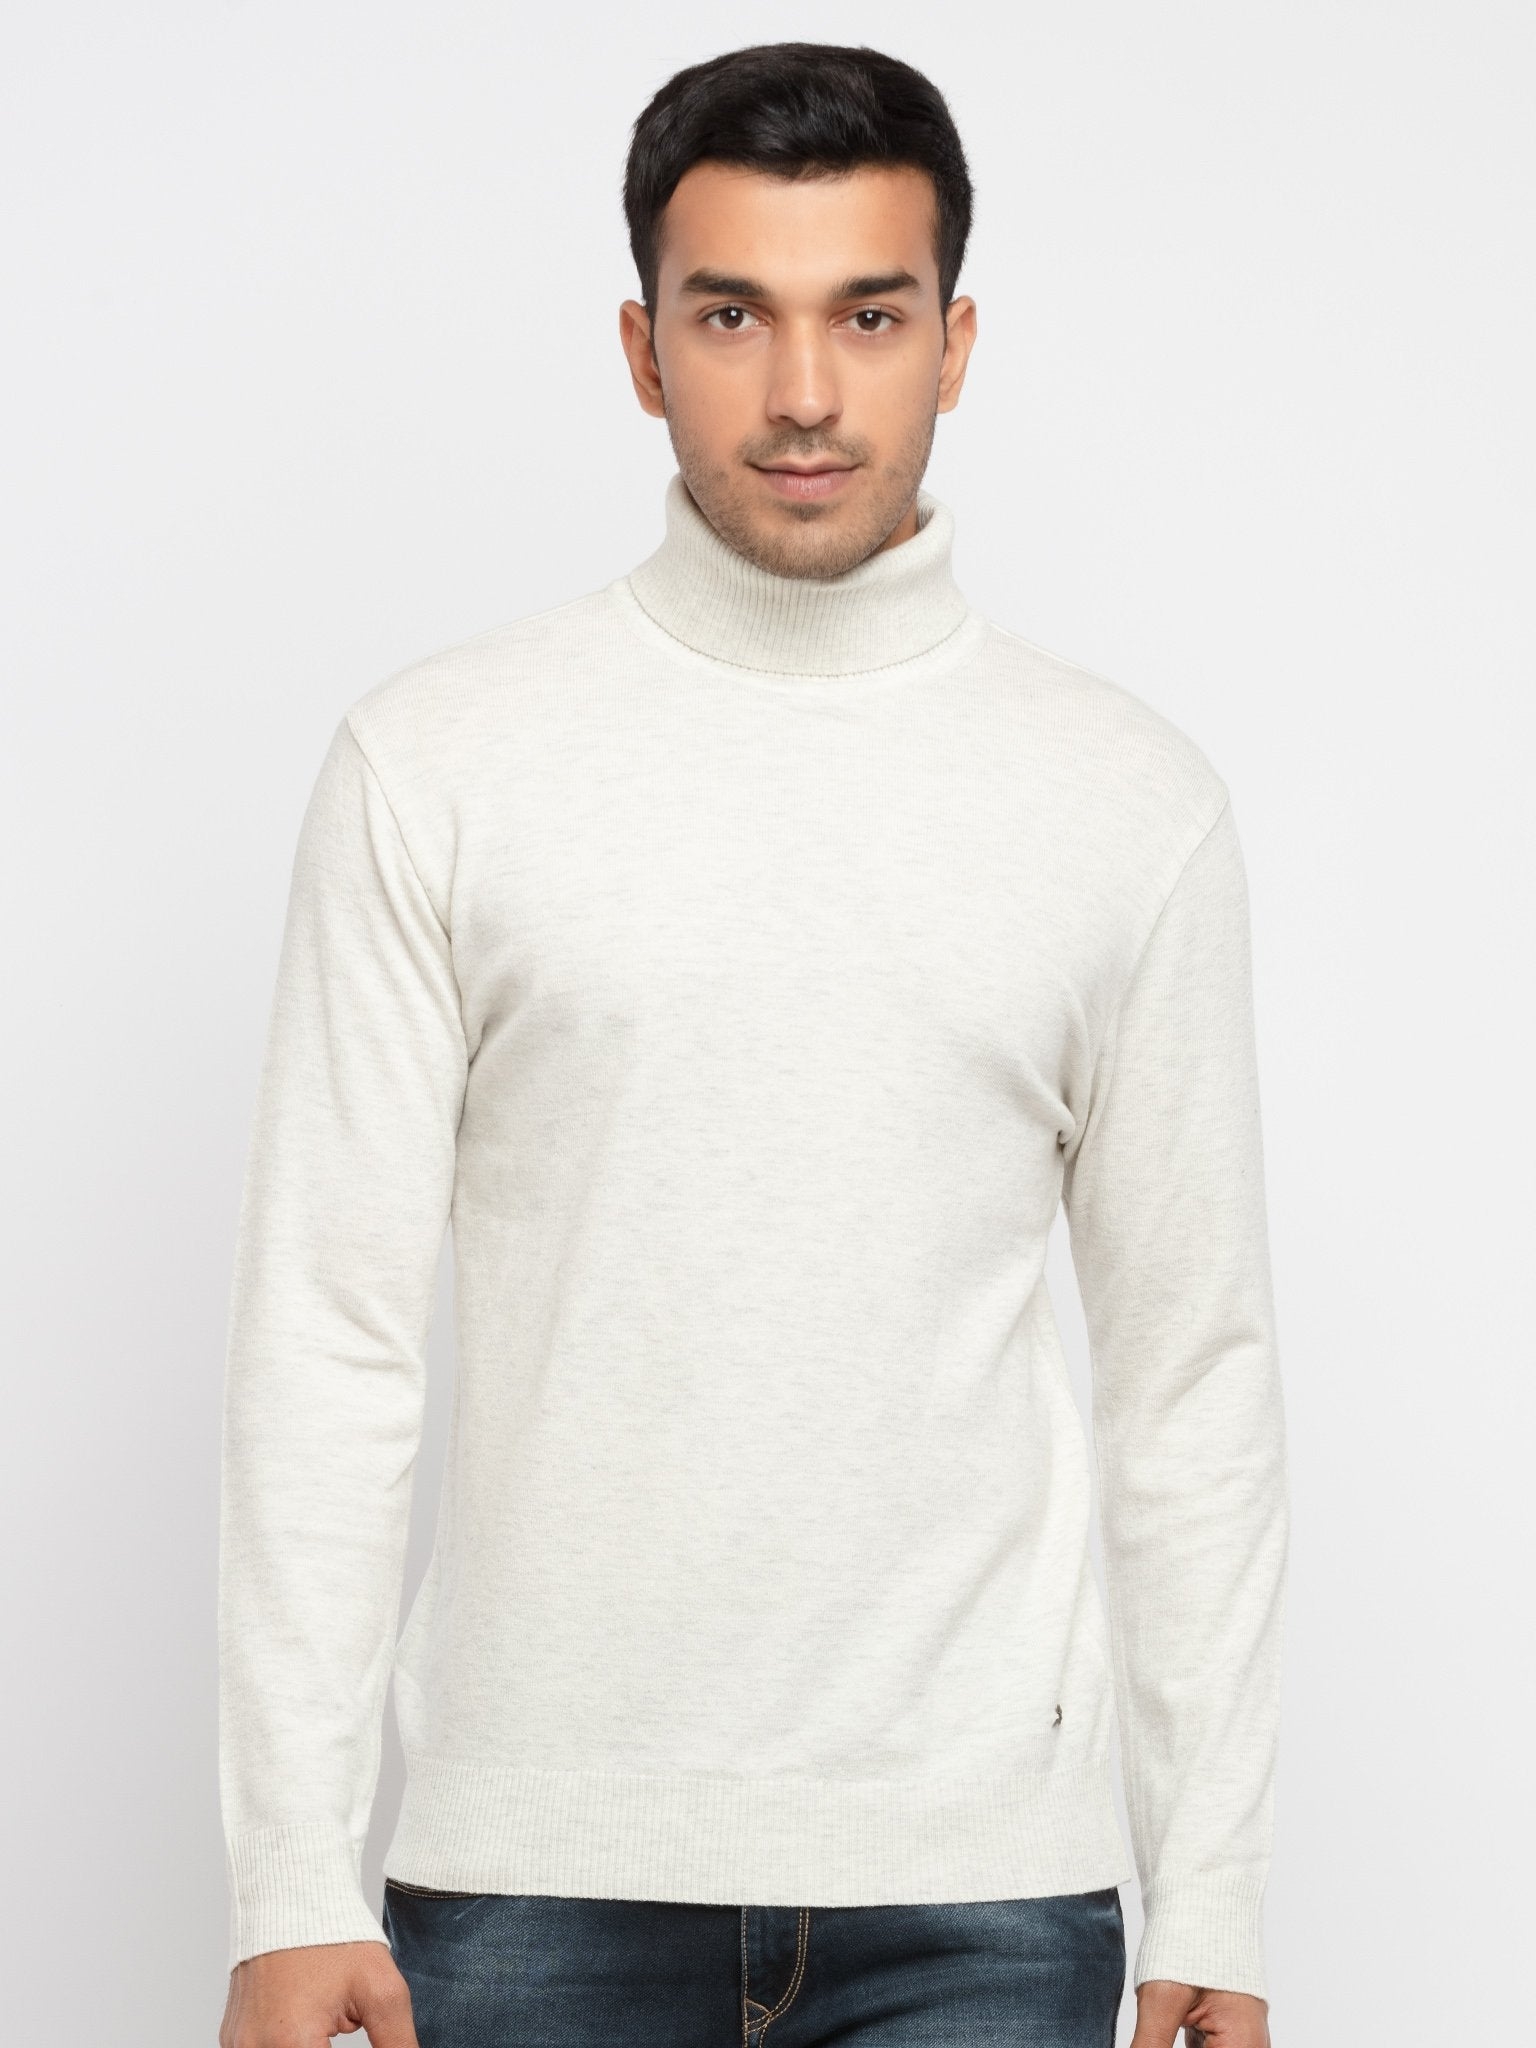 White Polycotton Melange Sweaters